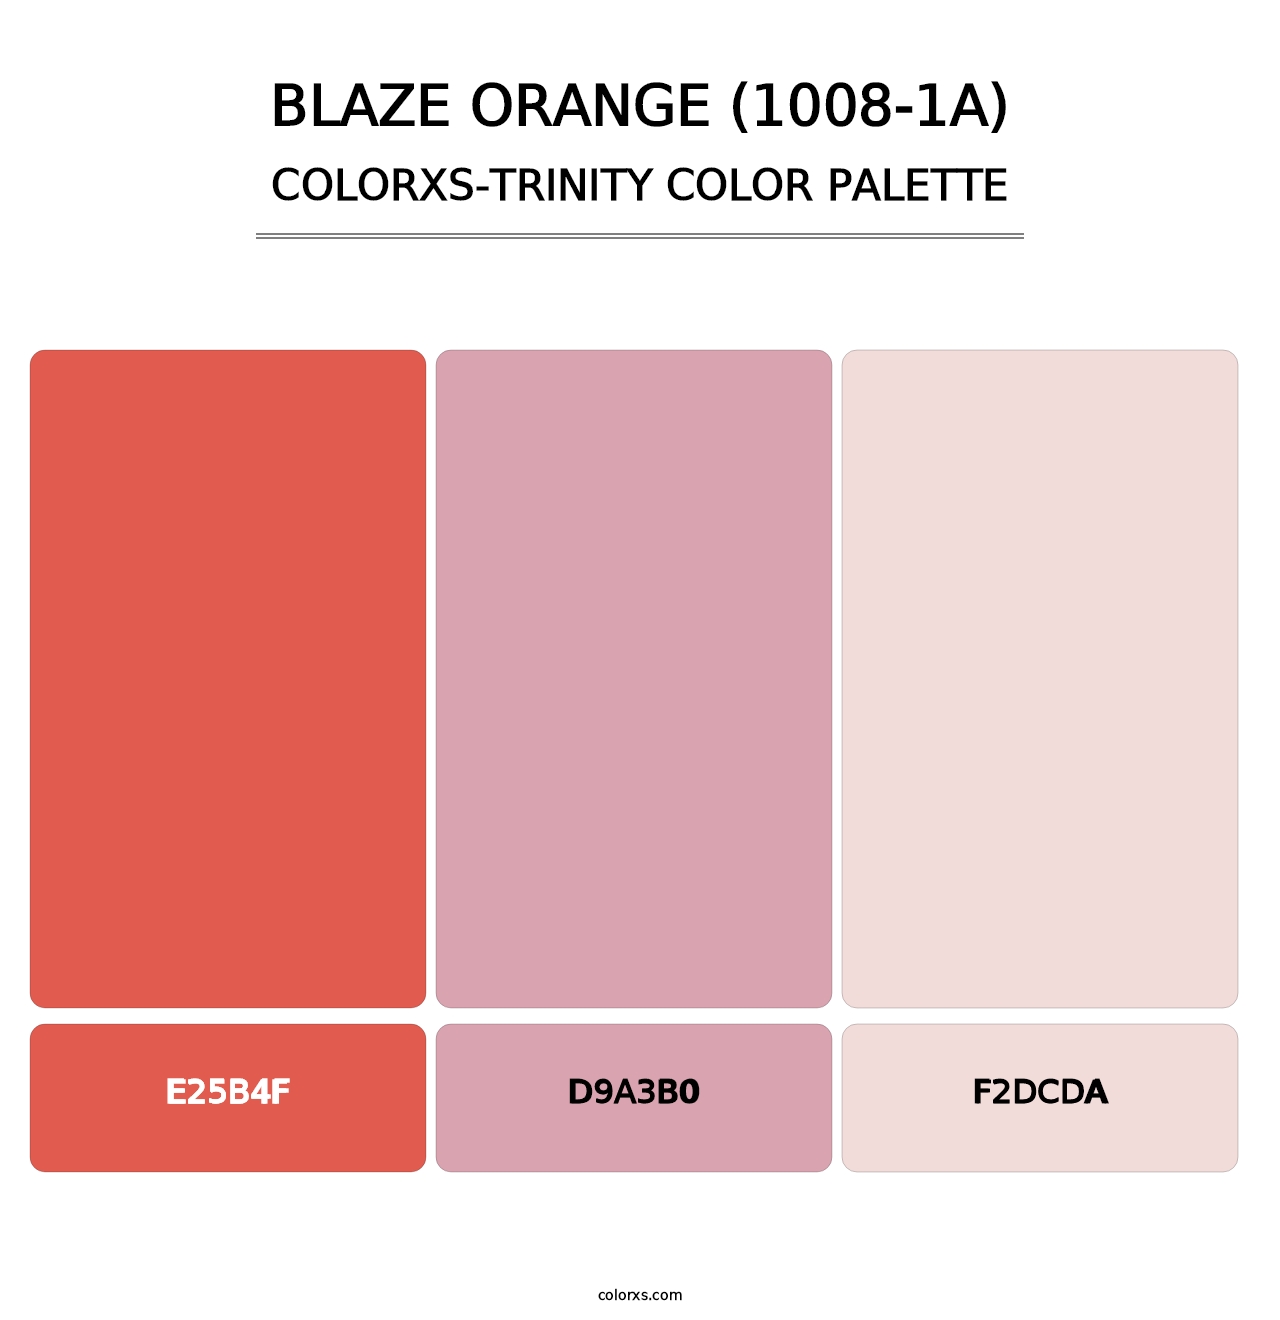 Blaze Orange (1008-1A) - Colorxs Trinity Palette